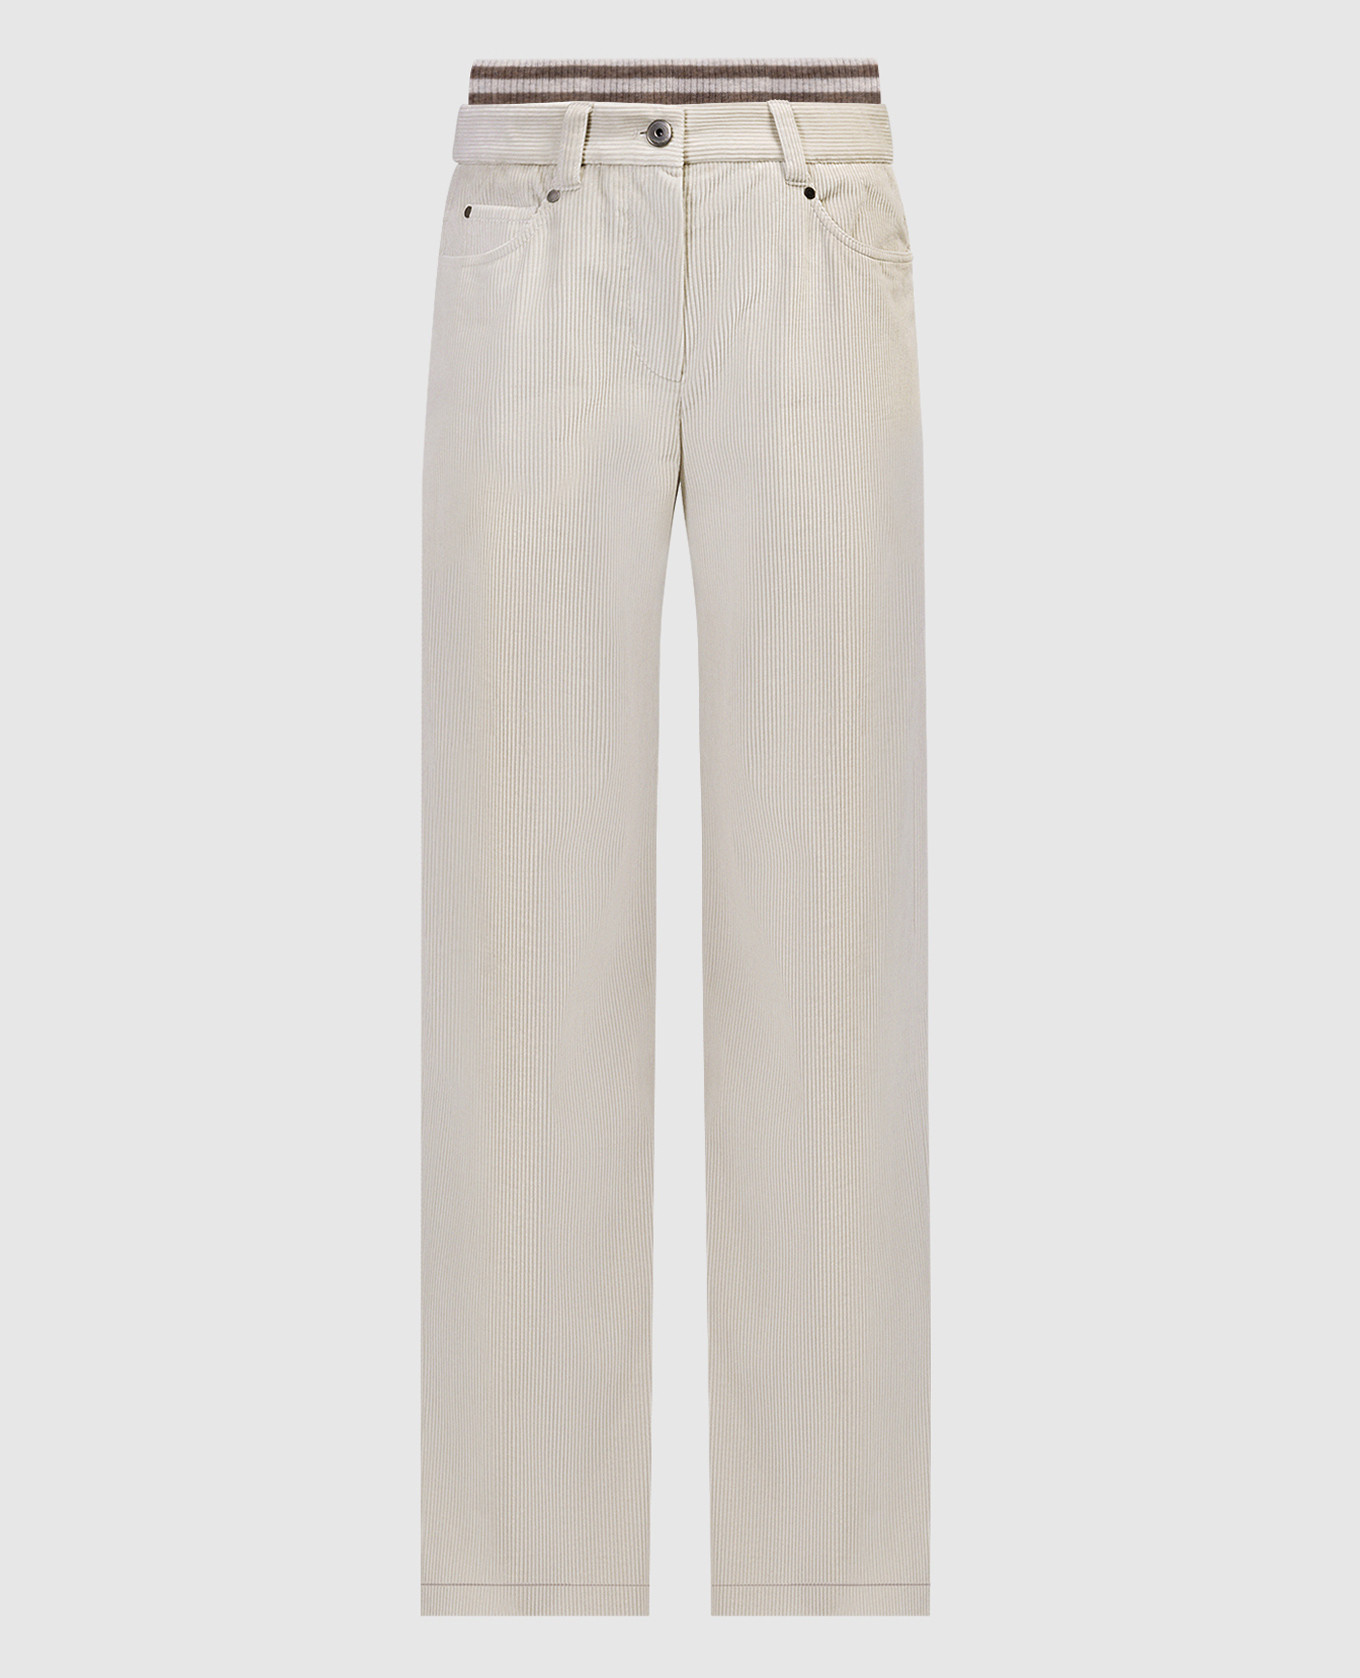 Gray corduroy pants with monil chain